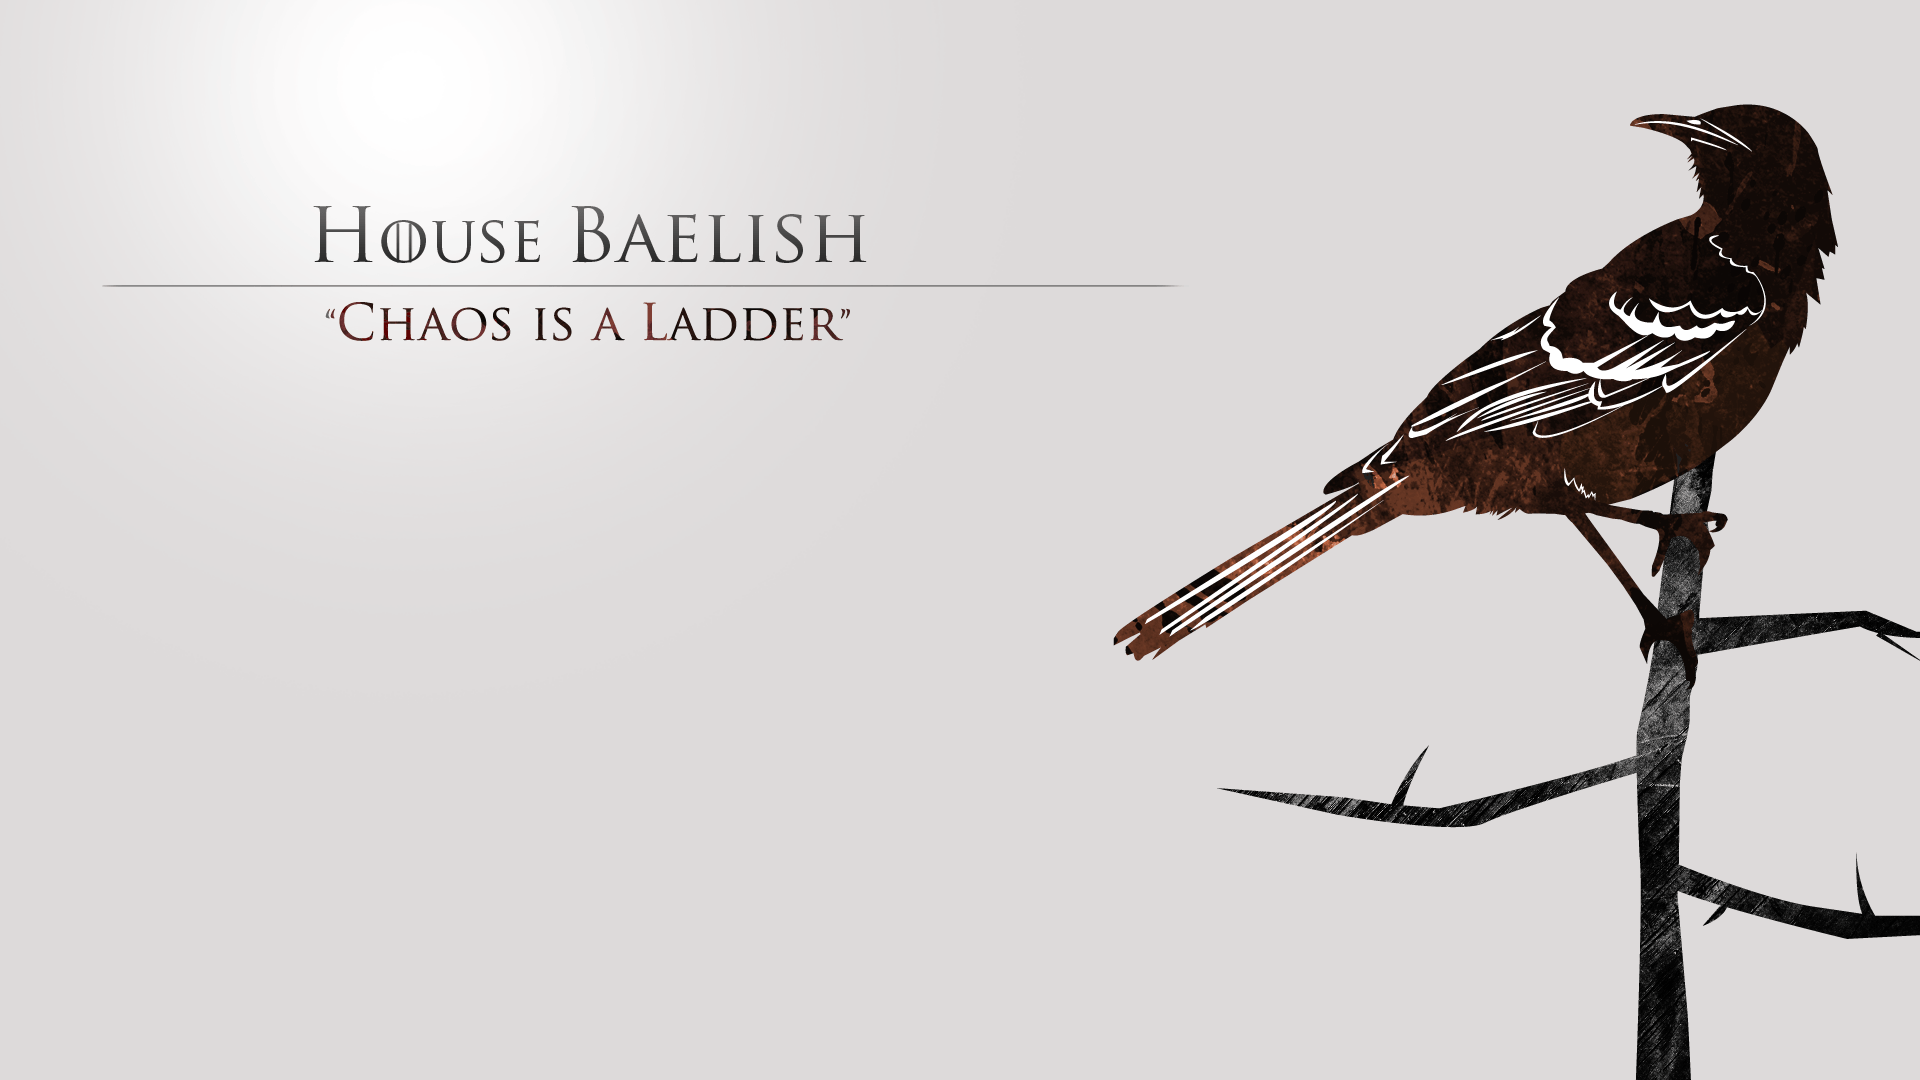 House Baelish wallpaper is a ladder. baelish